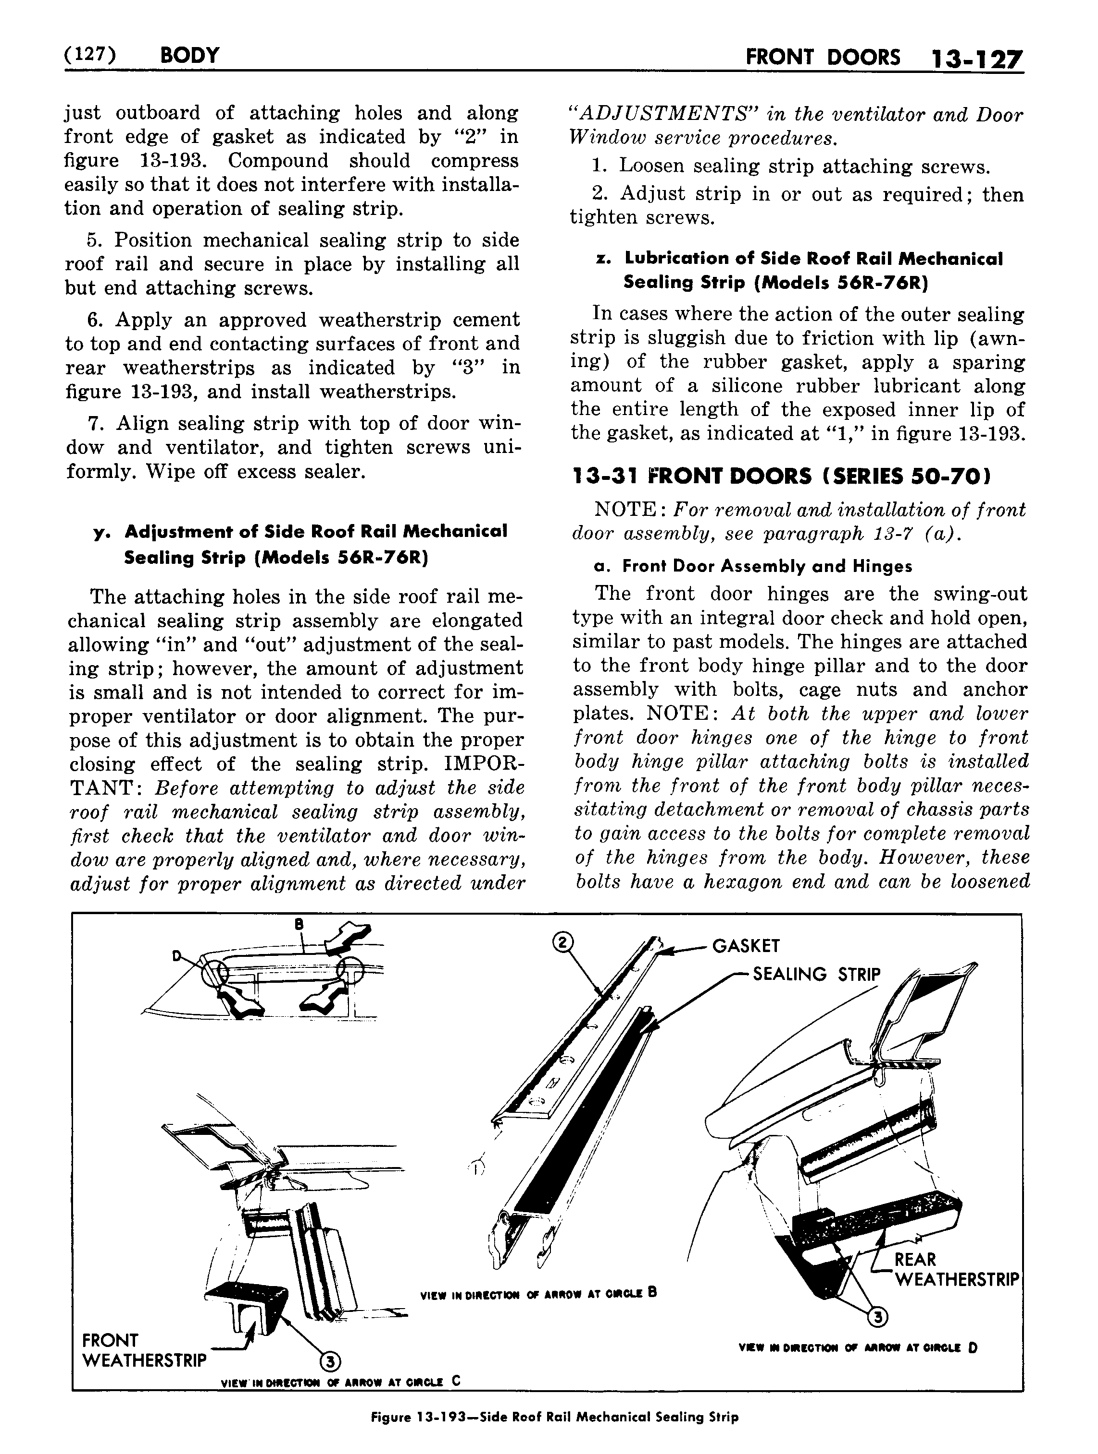 n_1957 Buick Body Service Manual-129-129.jpg